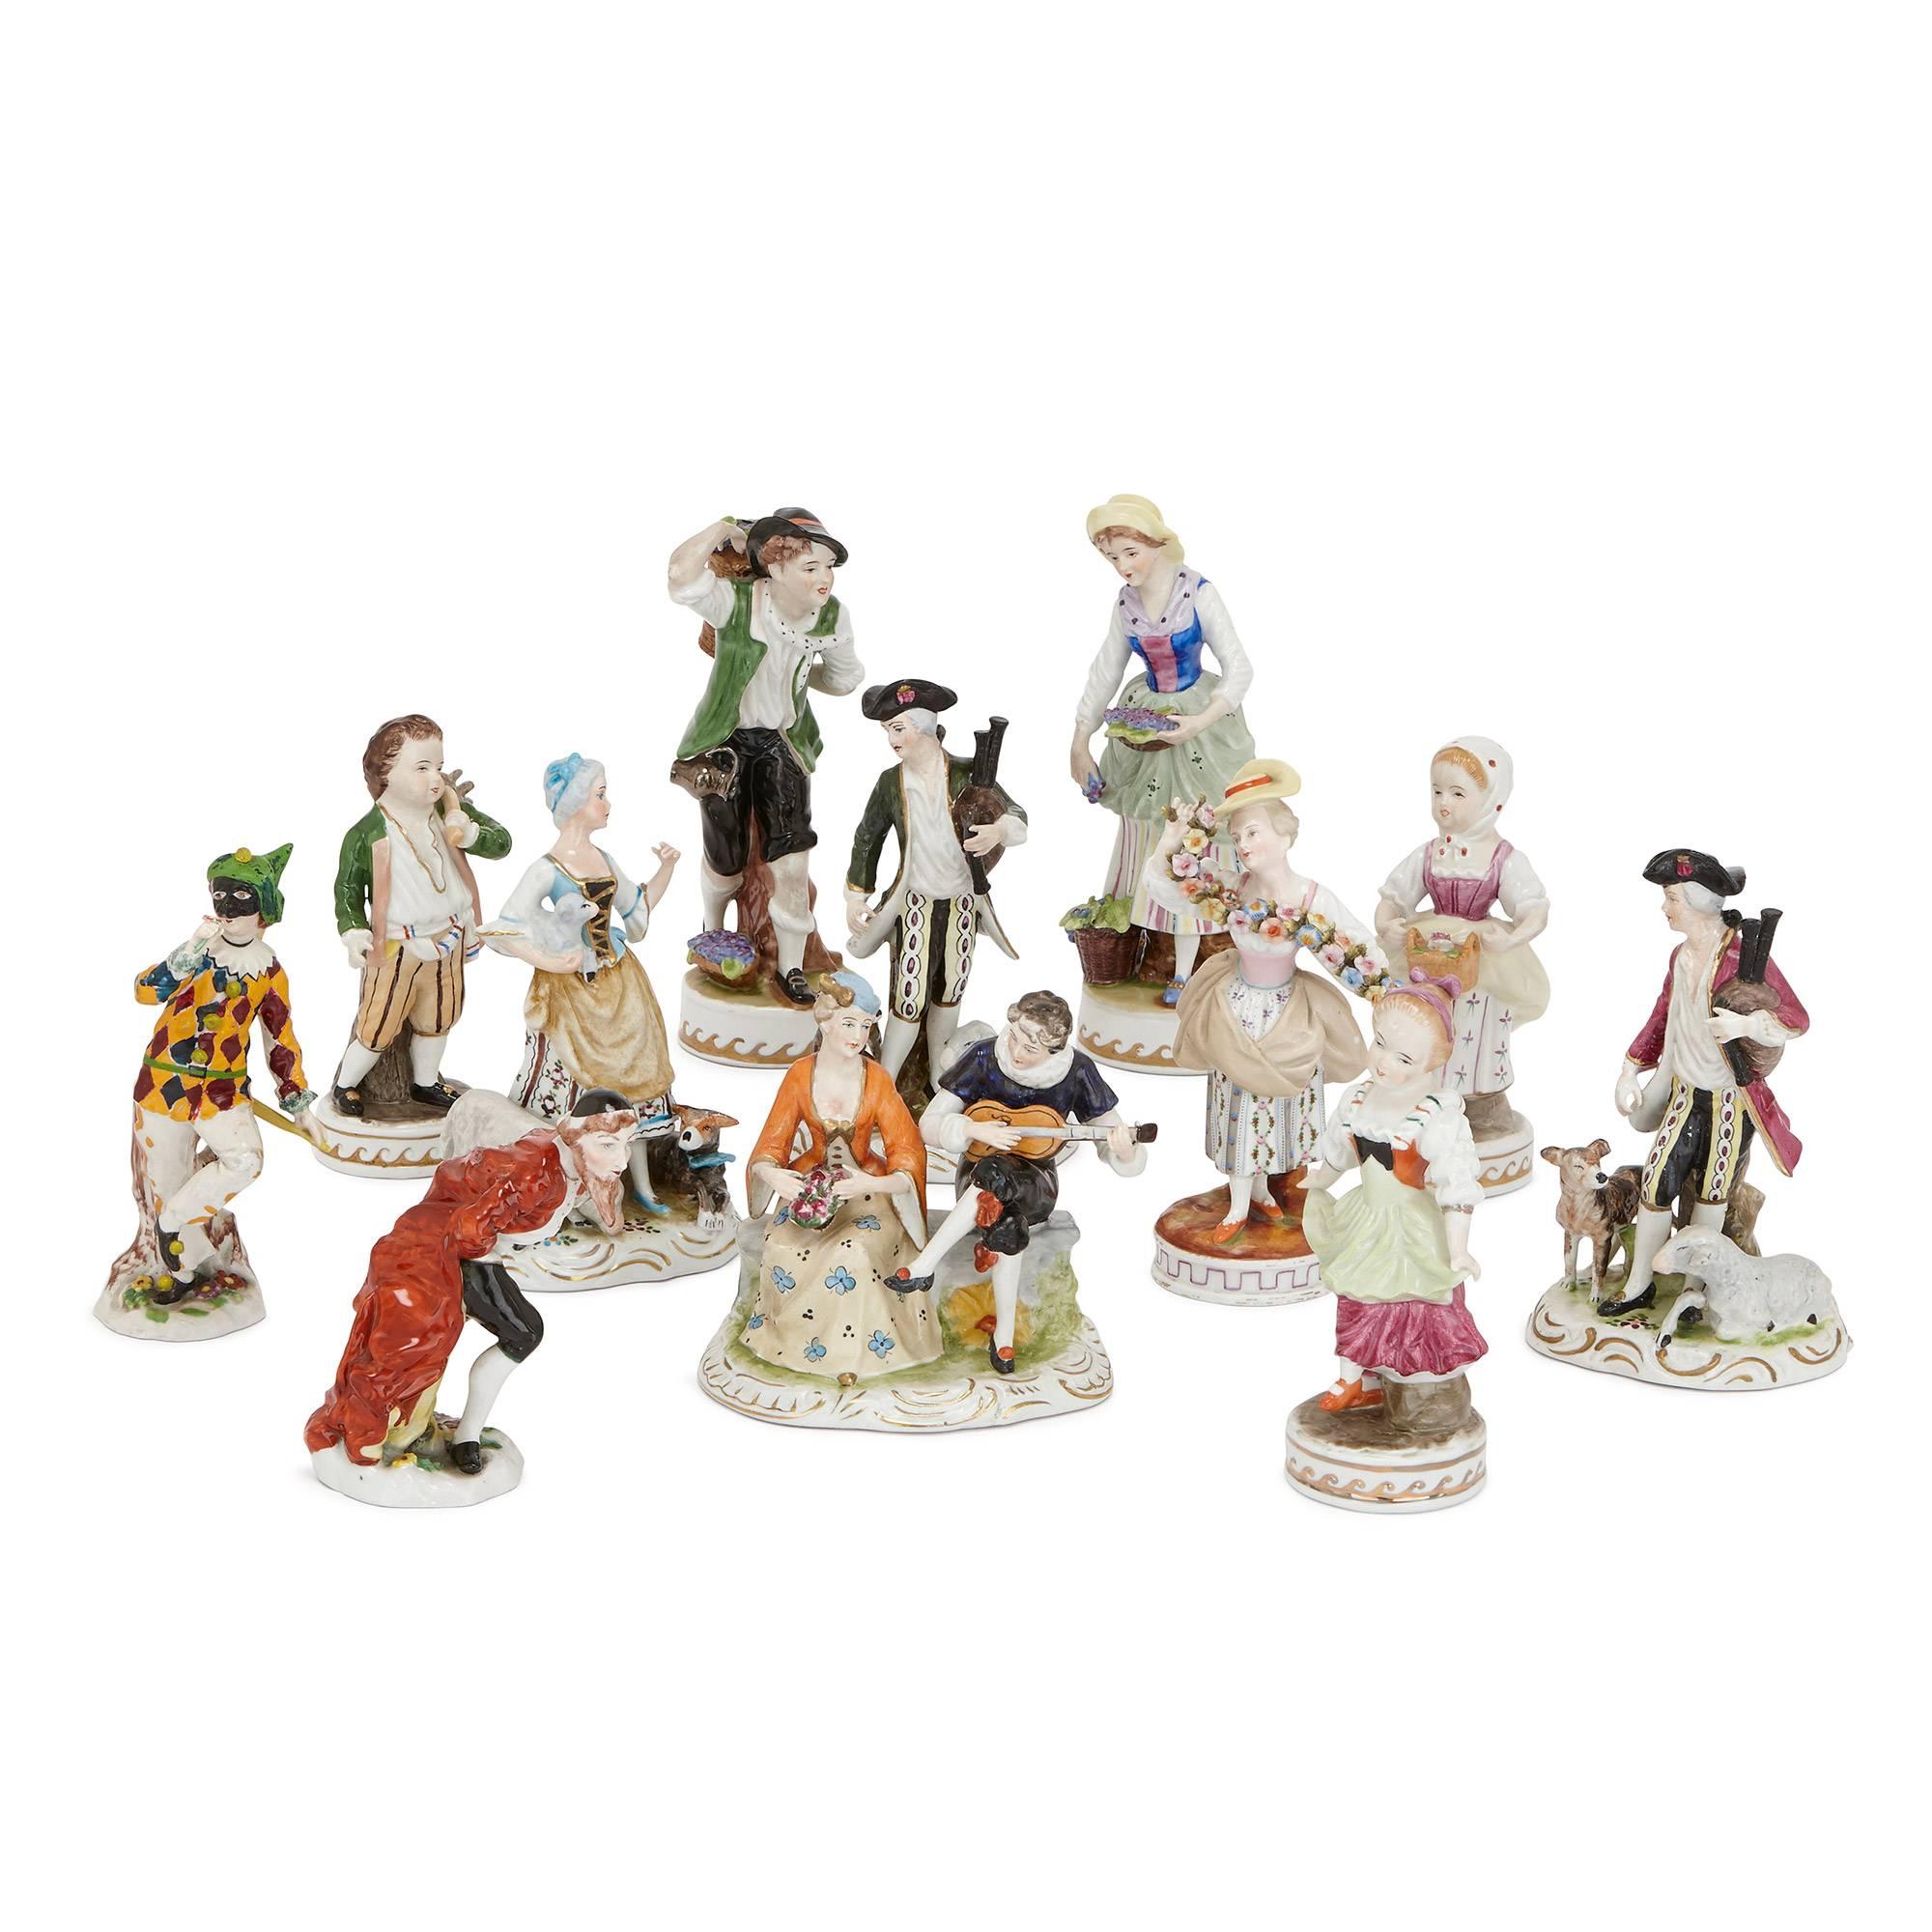 Set of 12 Dresden Porcelain Figures and Groups